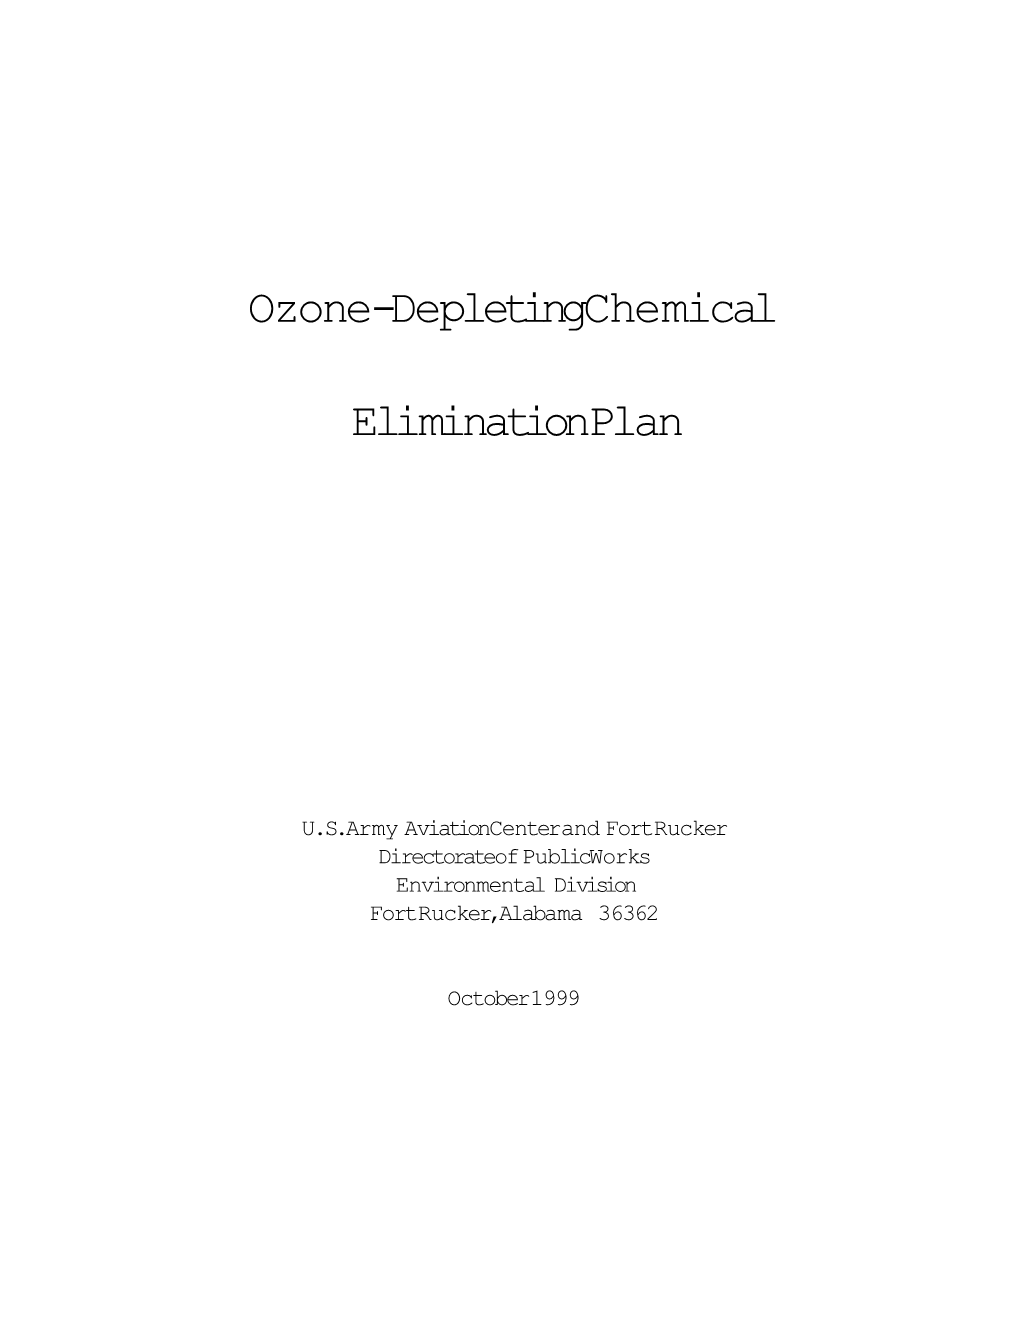 Ozone-Depleting Chemical Elimination Plan